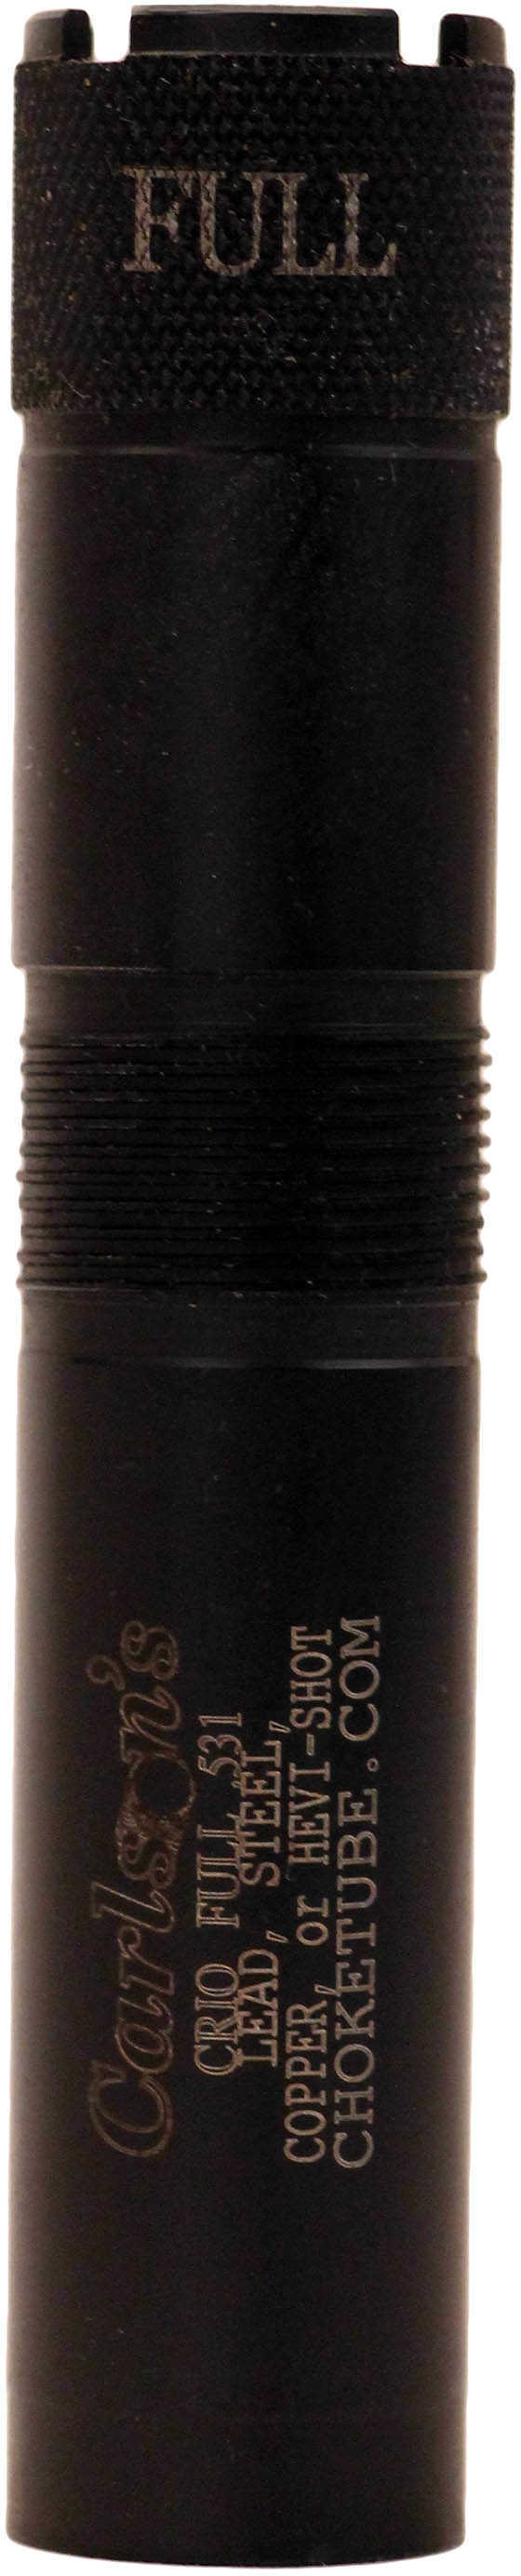 Carlsons Benelli Crio Plus 28 Gauge Black Sporting Clay Choke Tubes Full Md: 23017